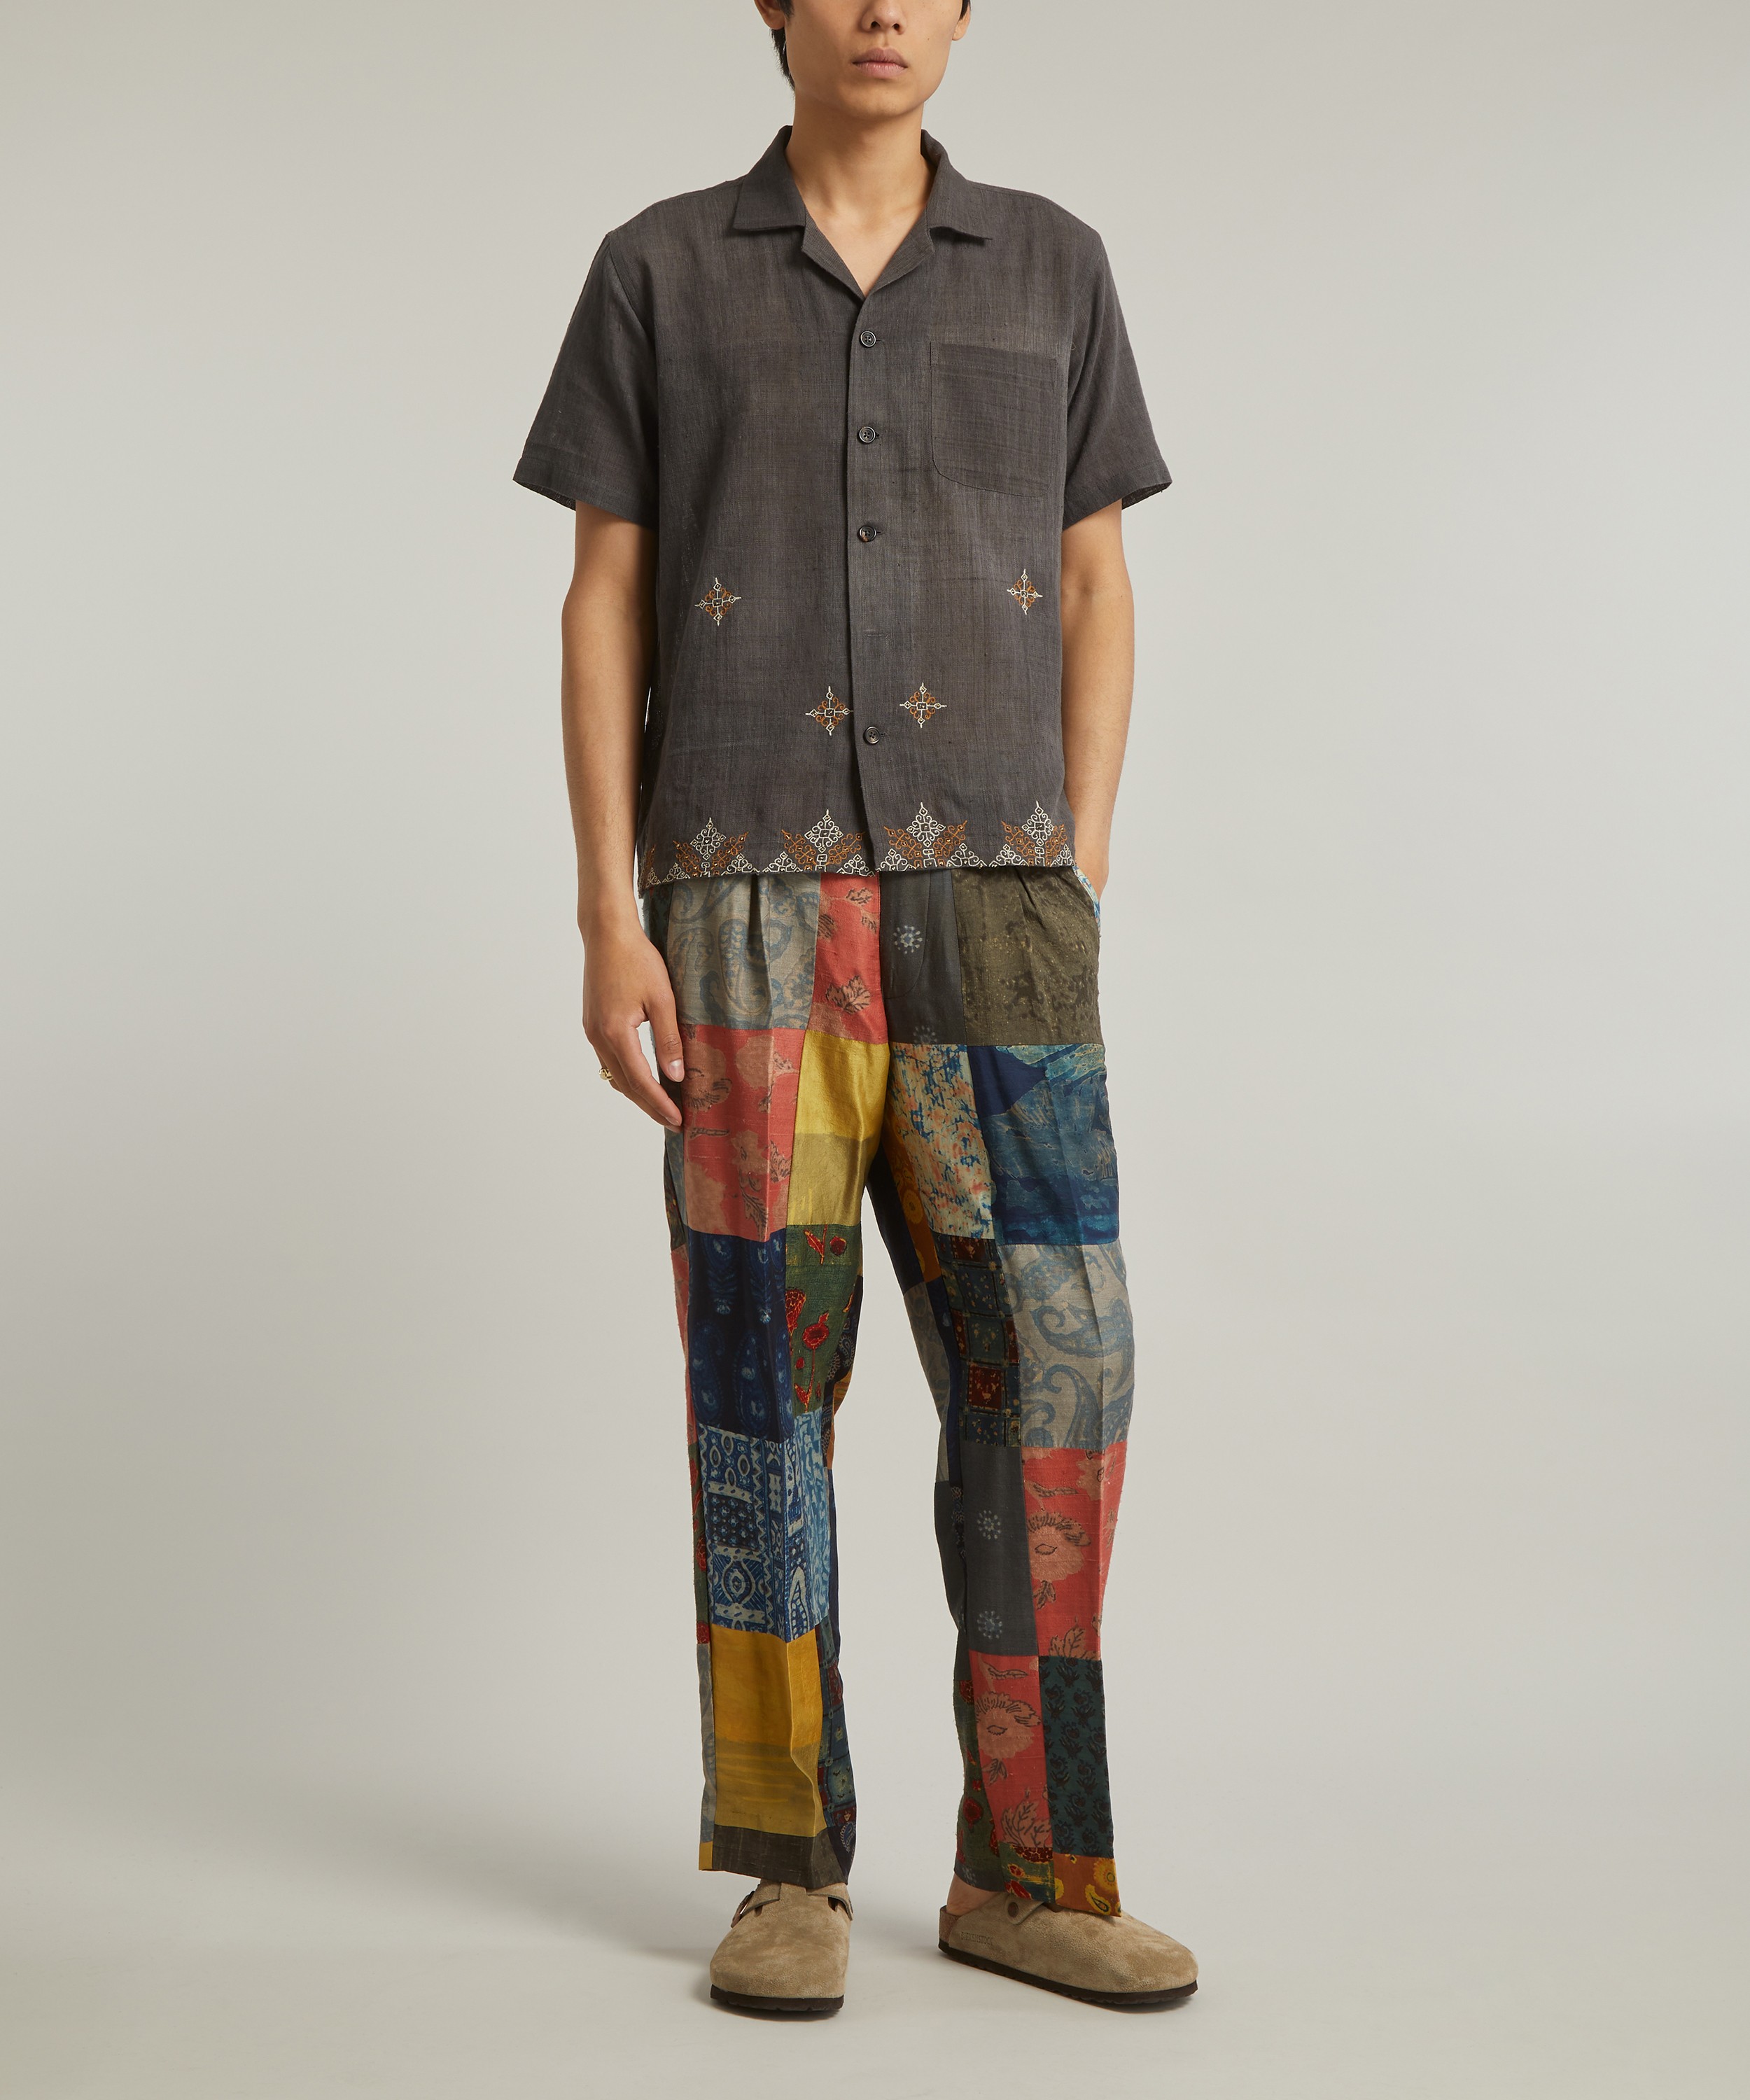 Kartik Research - Kasuti Handwoven Embroidered Cotton Shirt image number 1